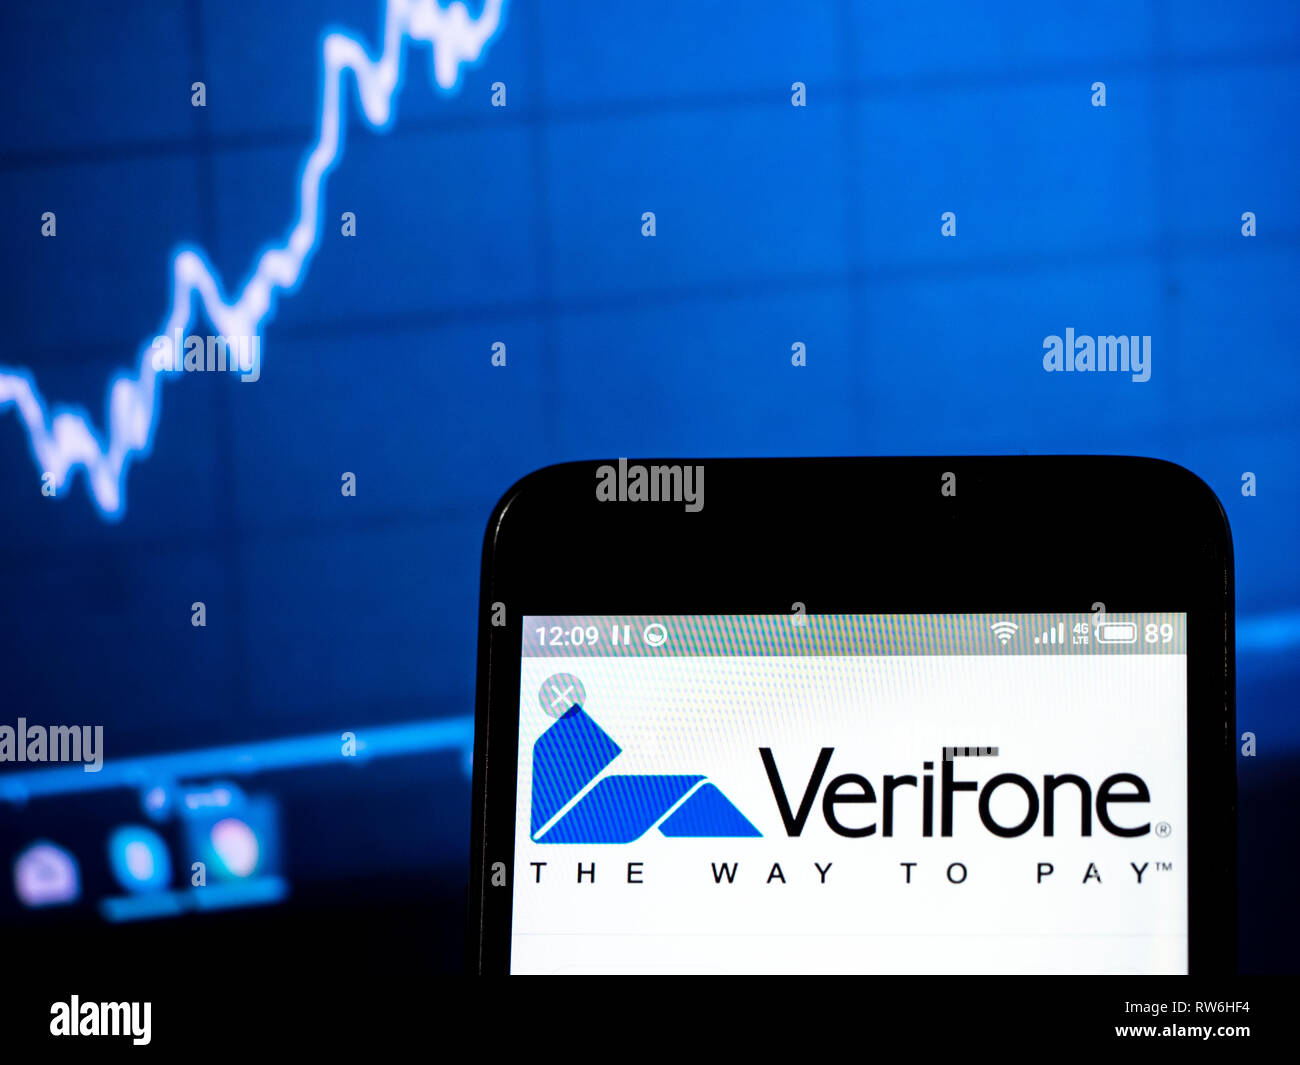 VeriFone company logo seen displayed on smart phone Stock Photo - Alamy